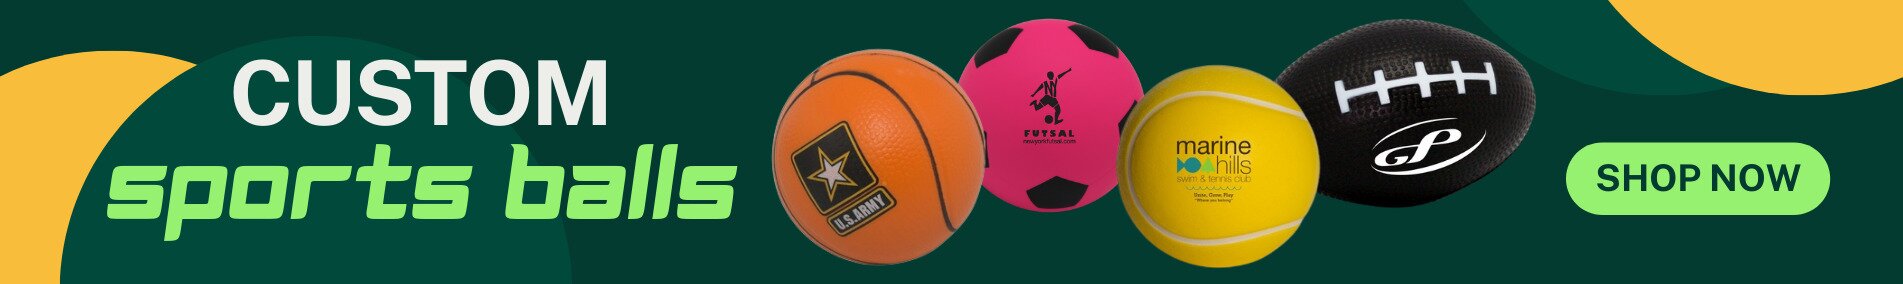 custom sports balls